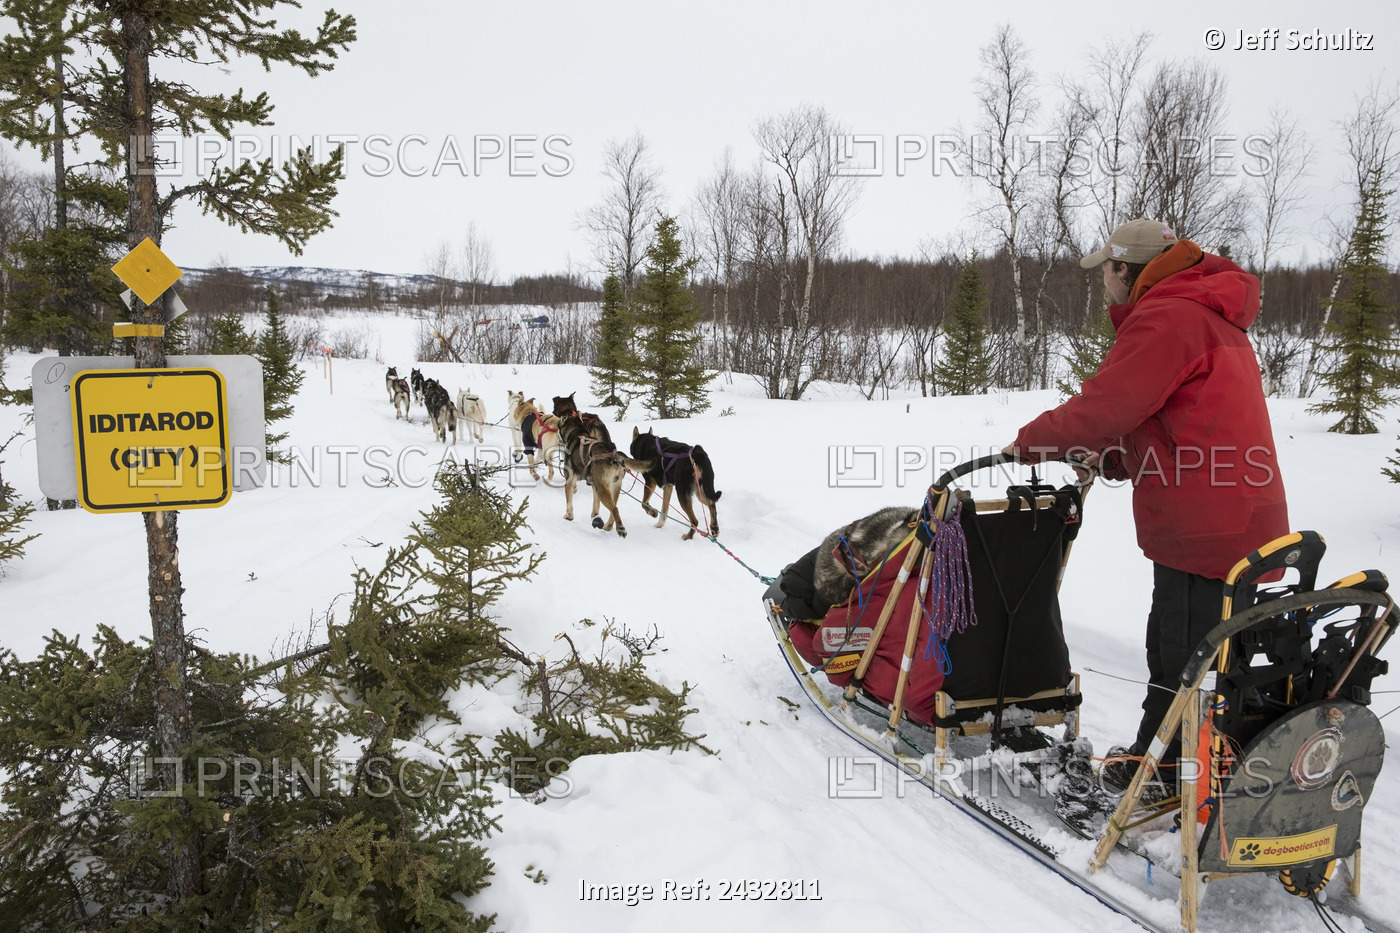 Jason Mackey 's Team Runs Down The Trail Passing A New Sign For Iditarod (City) ...